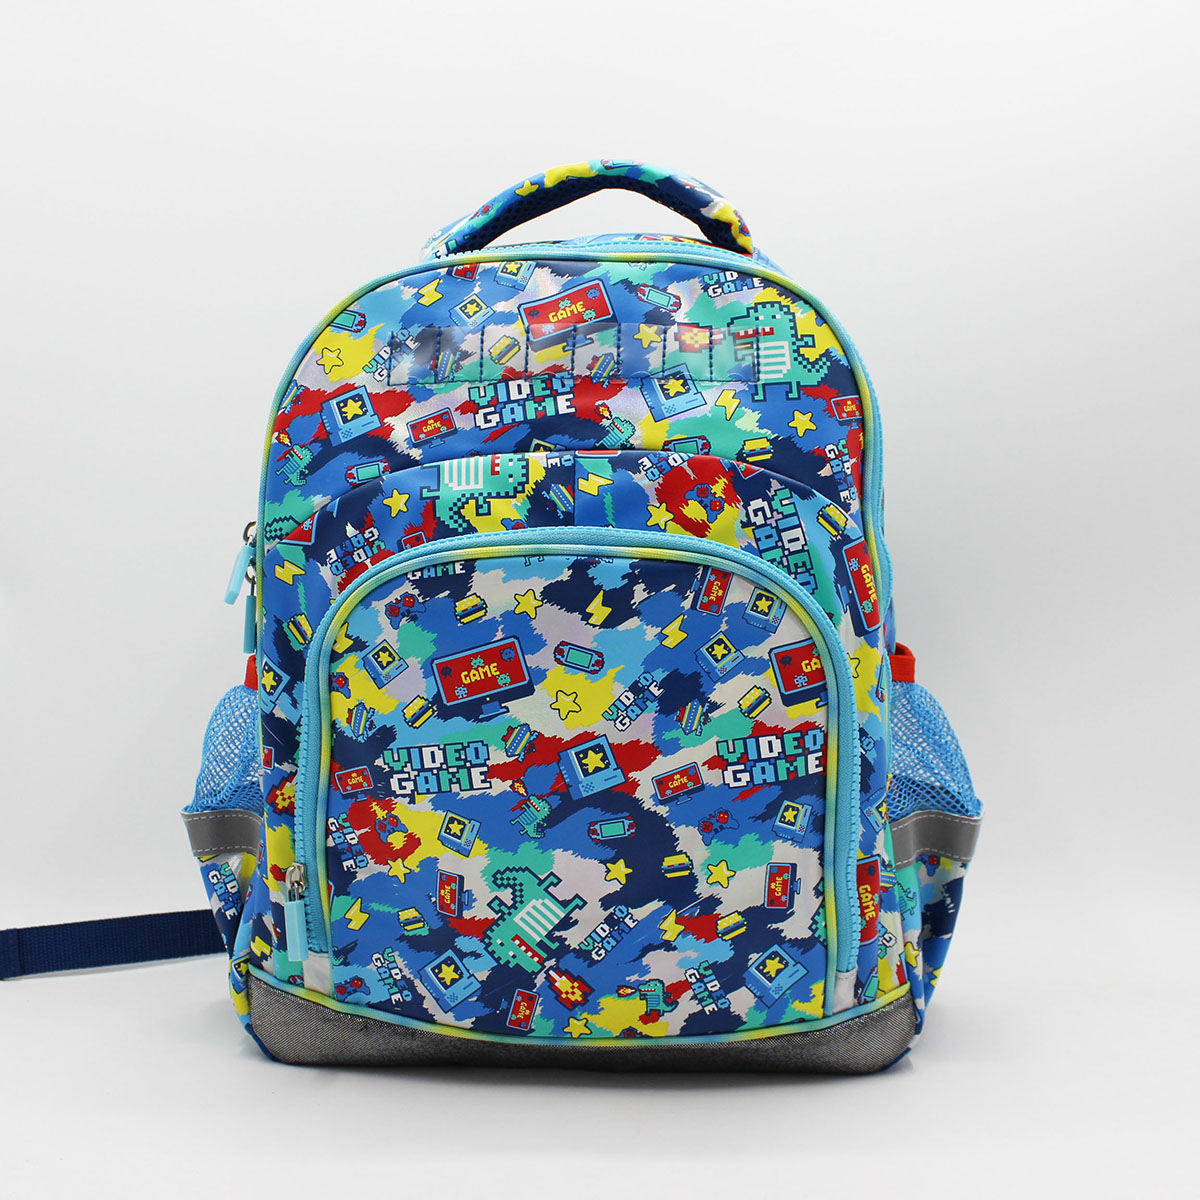 Backpack for Boy's